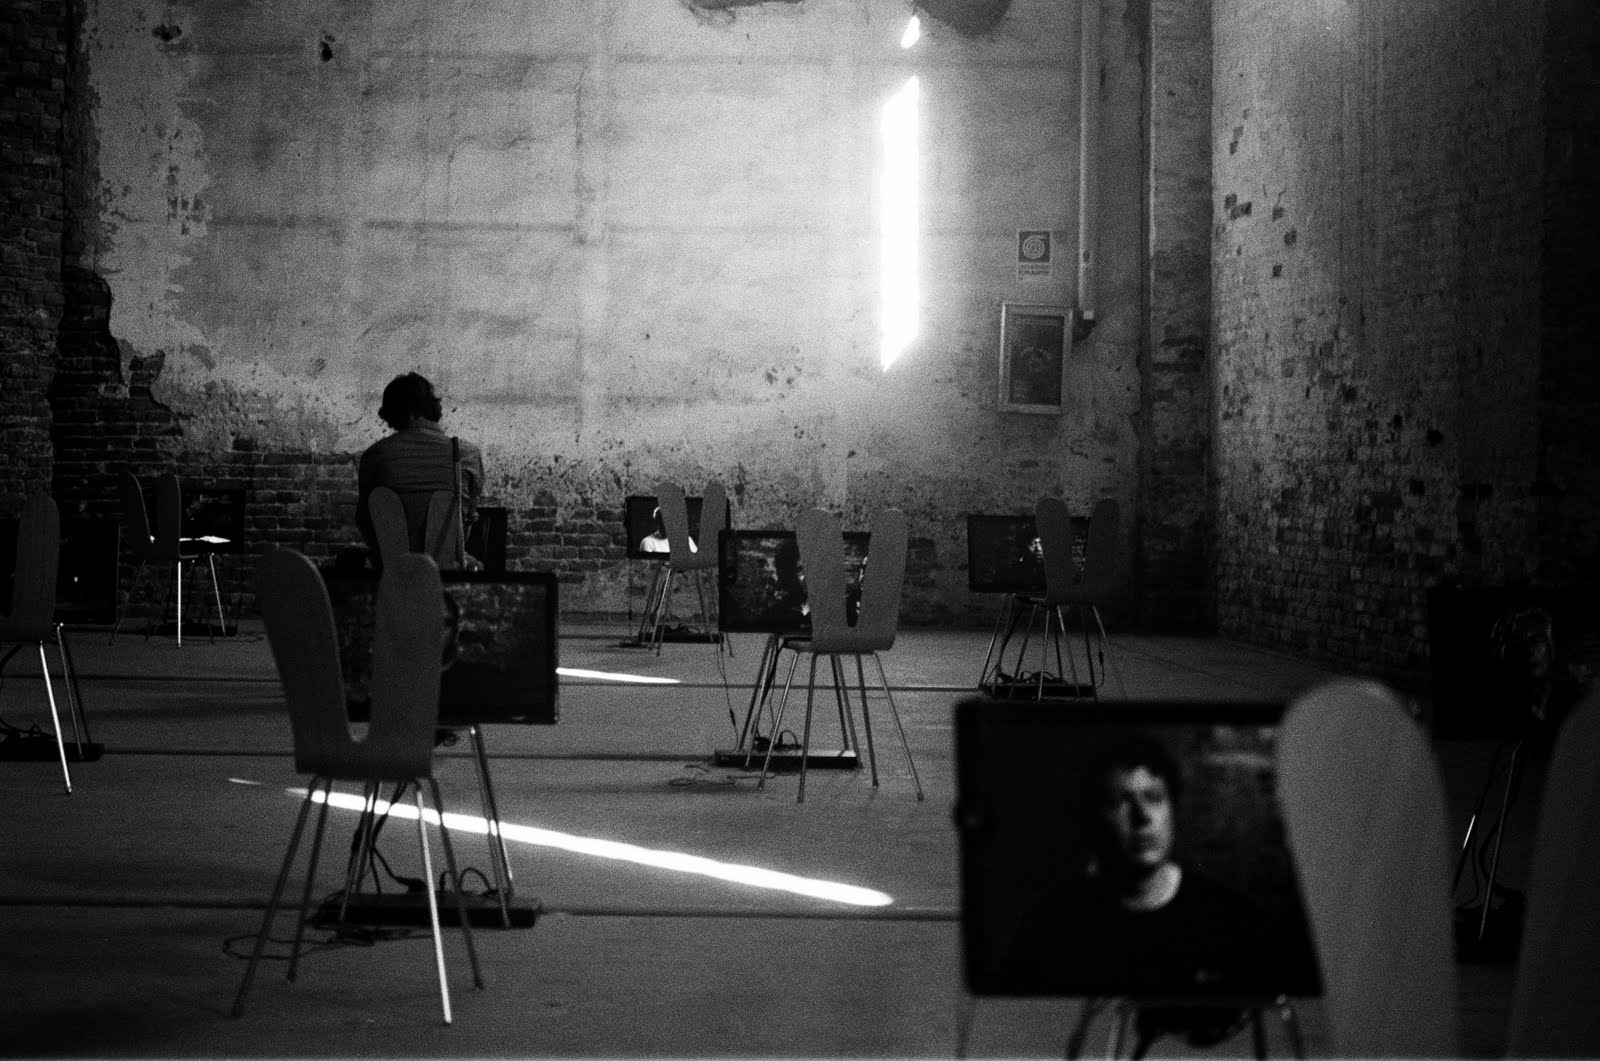 Venice biennale, black & white film